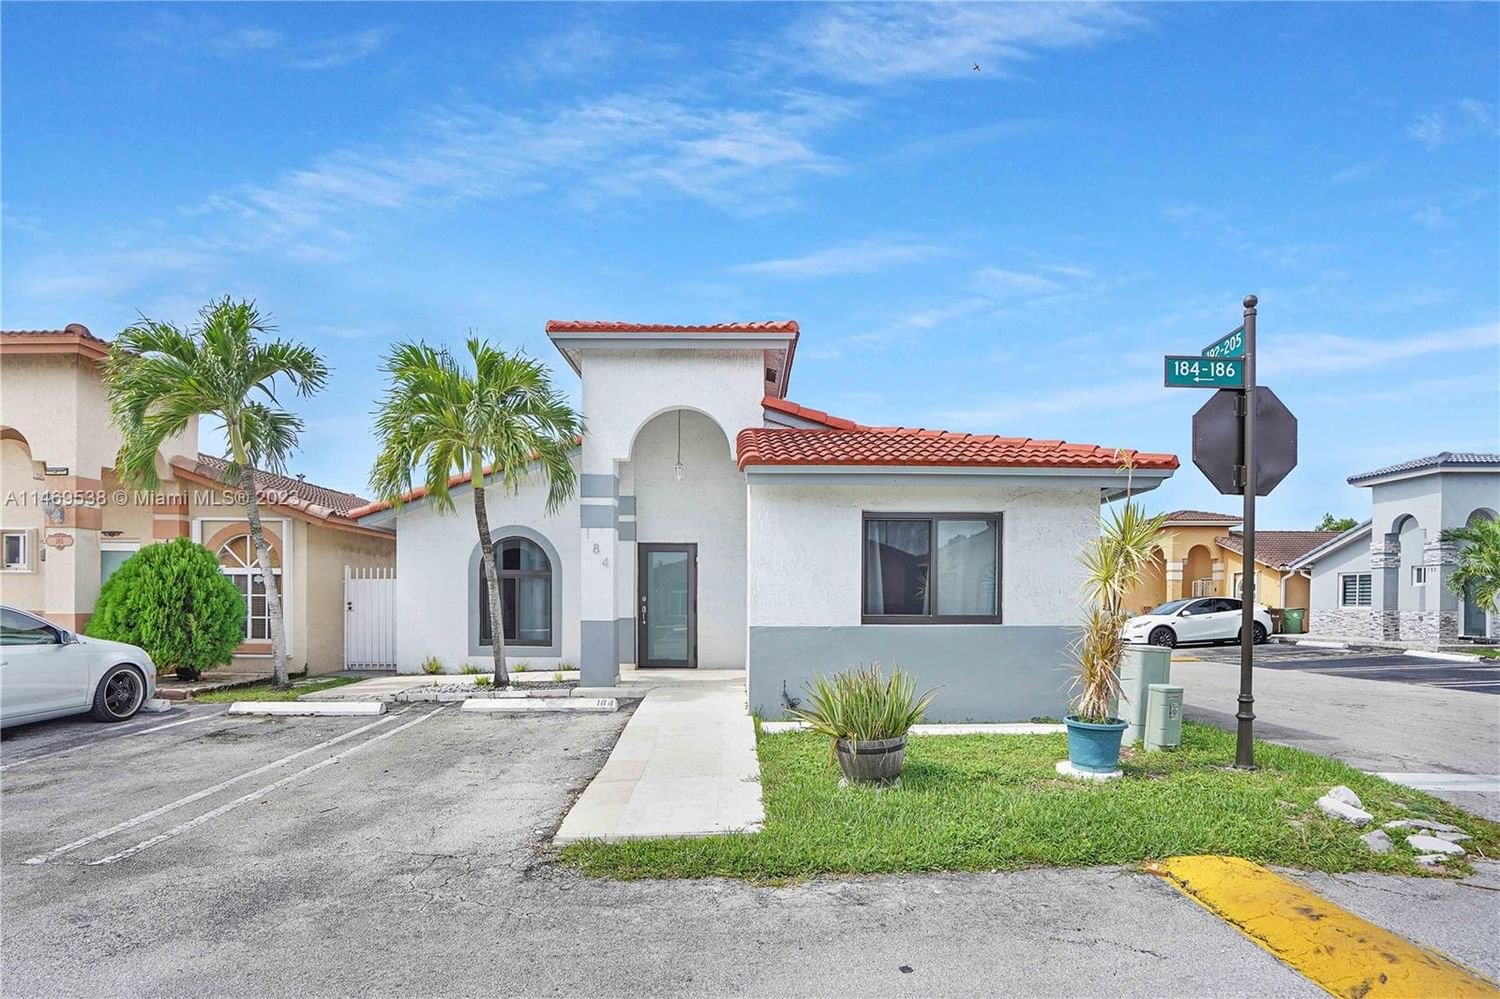 Real estate property located at 7001 35th Ave #184, Miami-Dade County, LOS PALACIOS II CONDO, Hialeah, FL